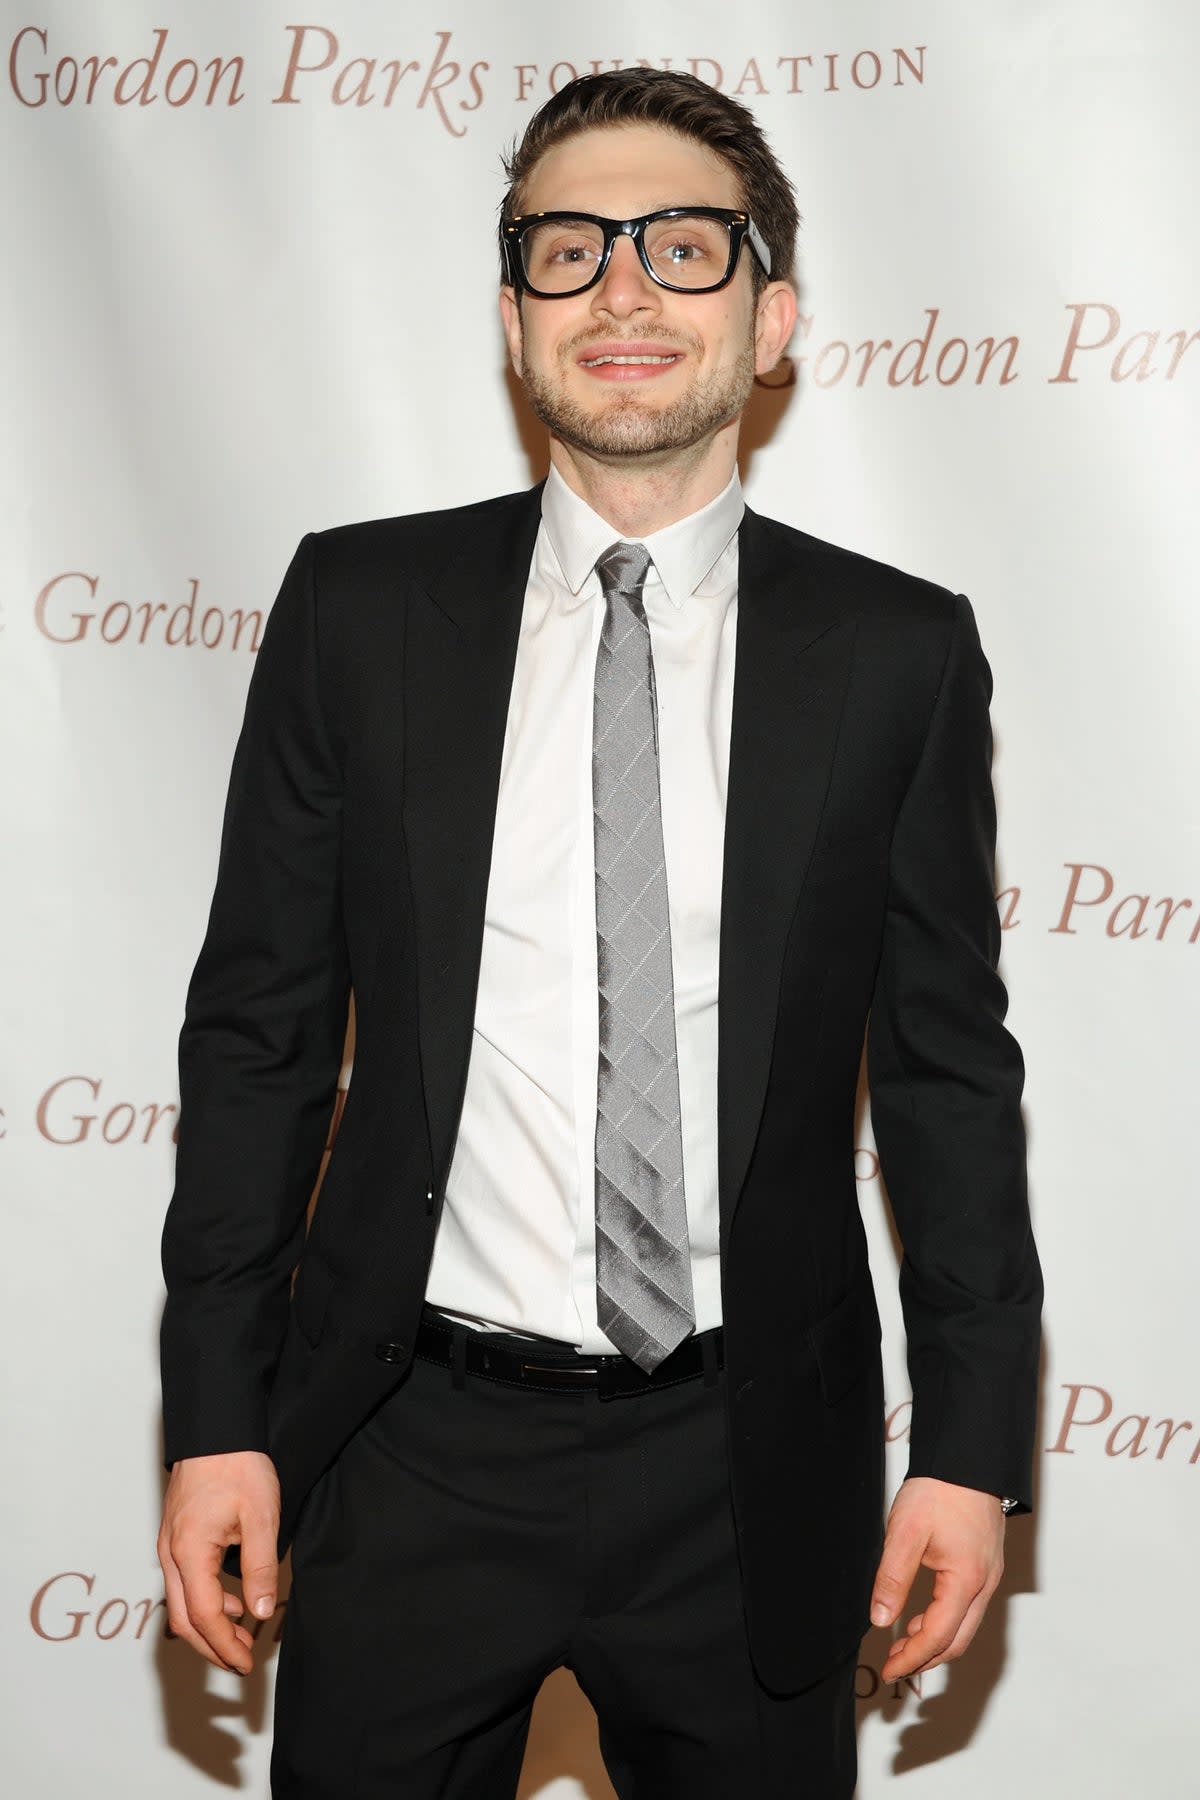 Philanthropist Alex Soros attends 2013 Gordon Parks Foundation Awards  at The Plaza Hotel (Getty Images)